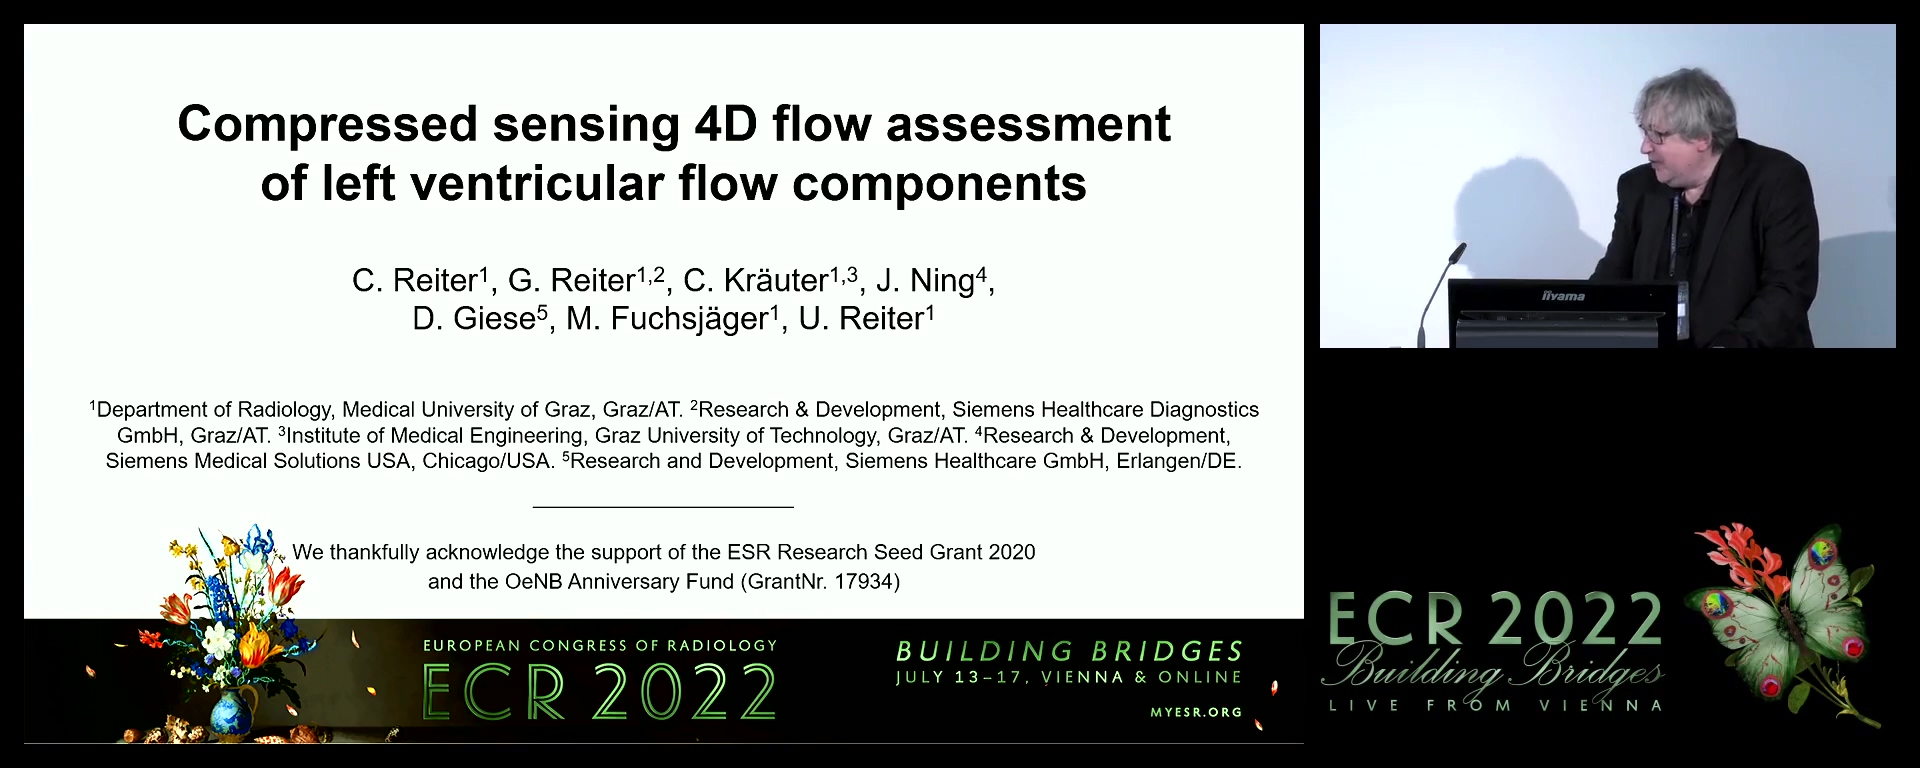 Compressed sensing 4D flow assessment of left ventricular flow components - Gert Reiter, Graz / AT